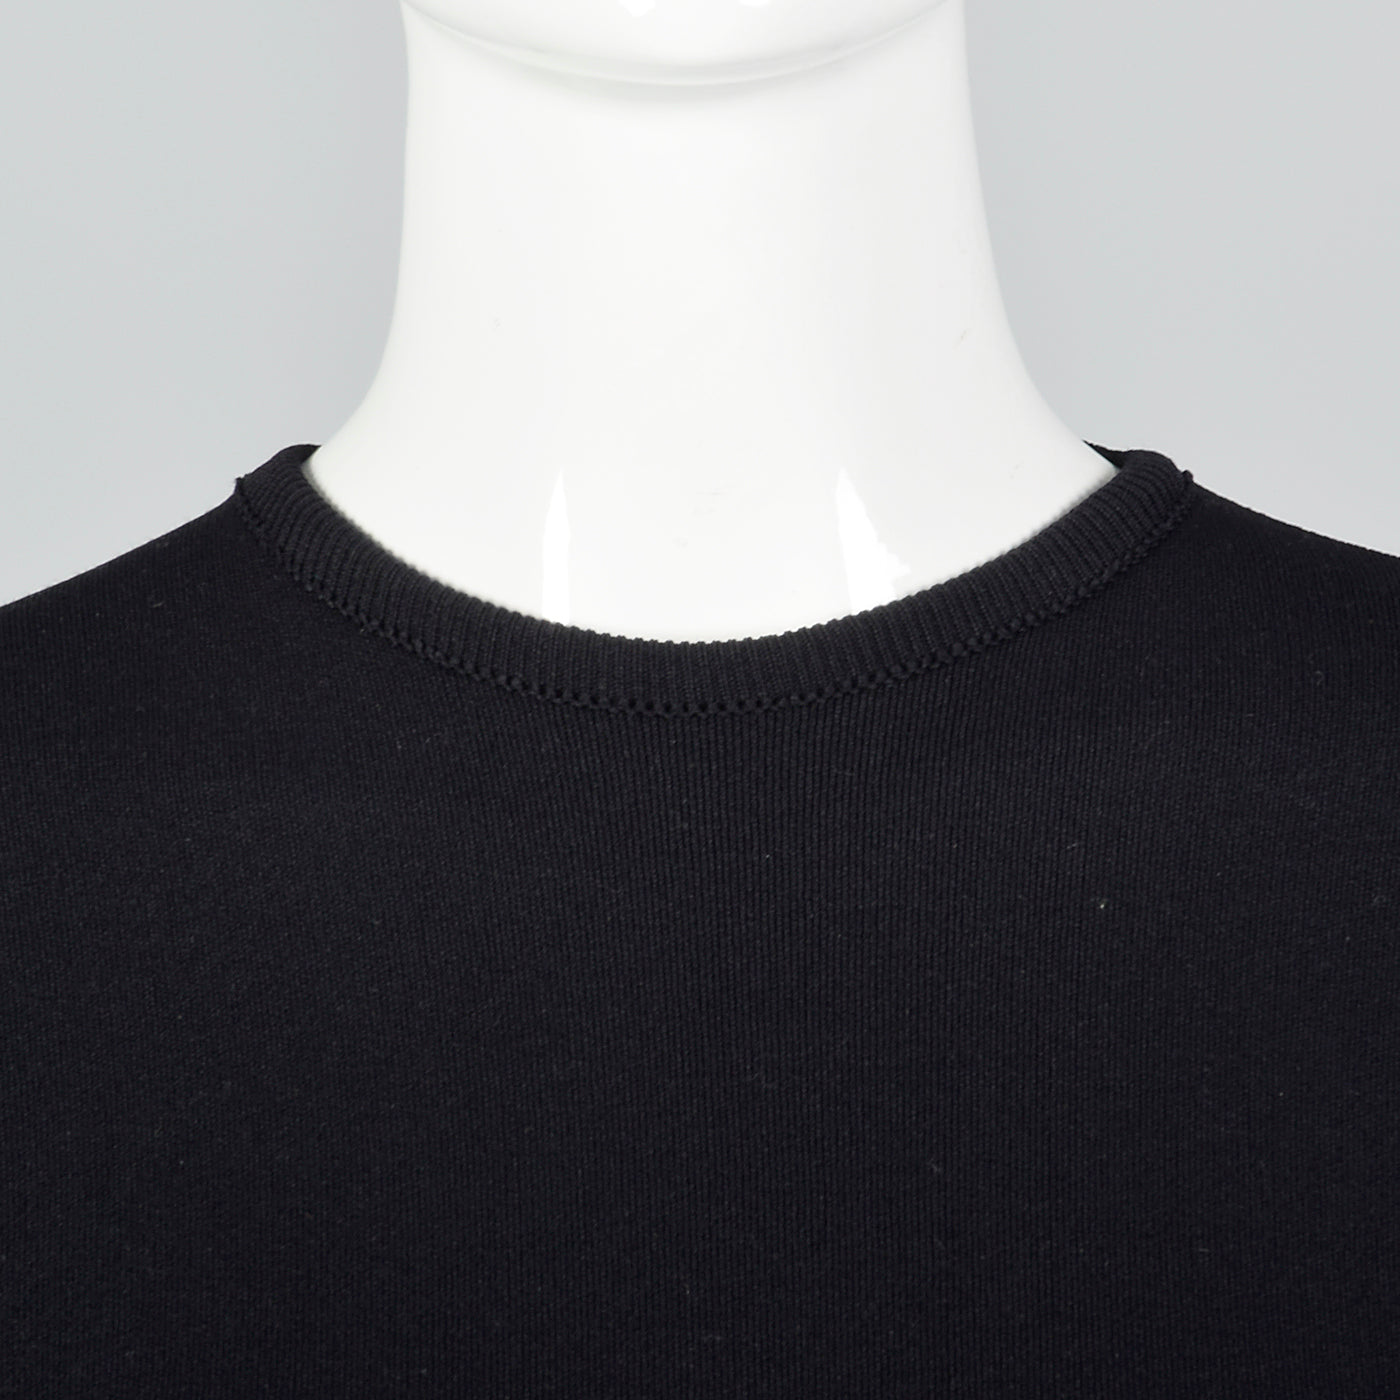 1960s Deadstock Black Nylon Knit Sweater